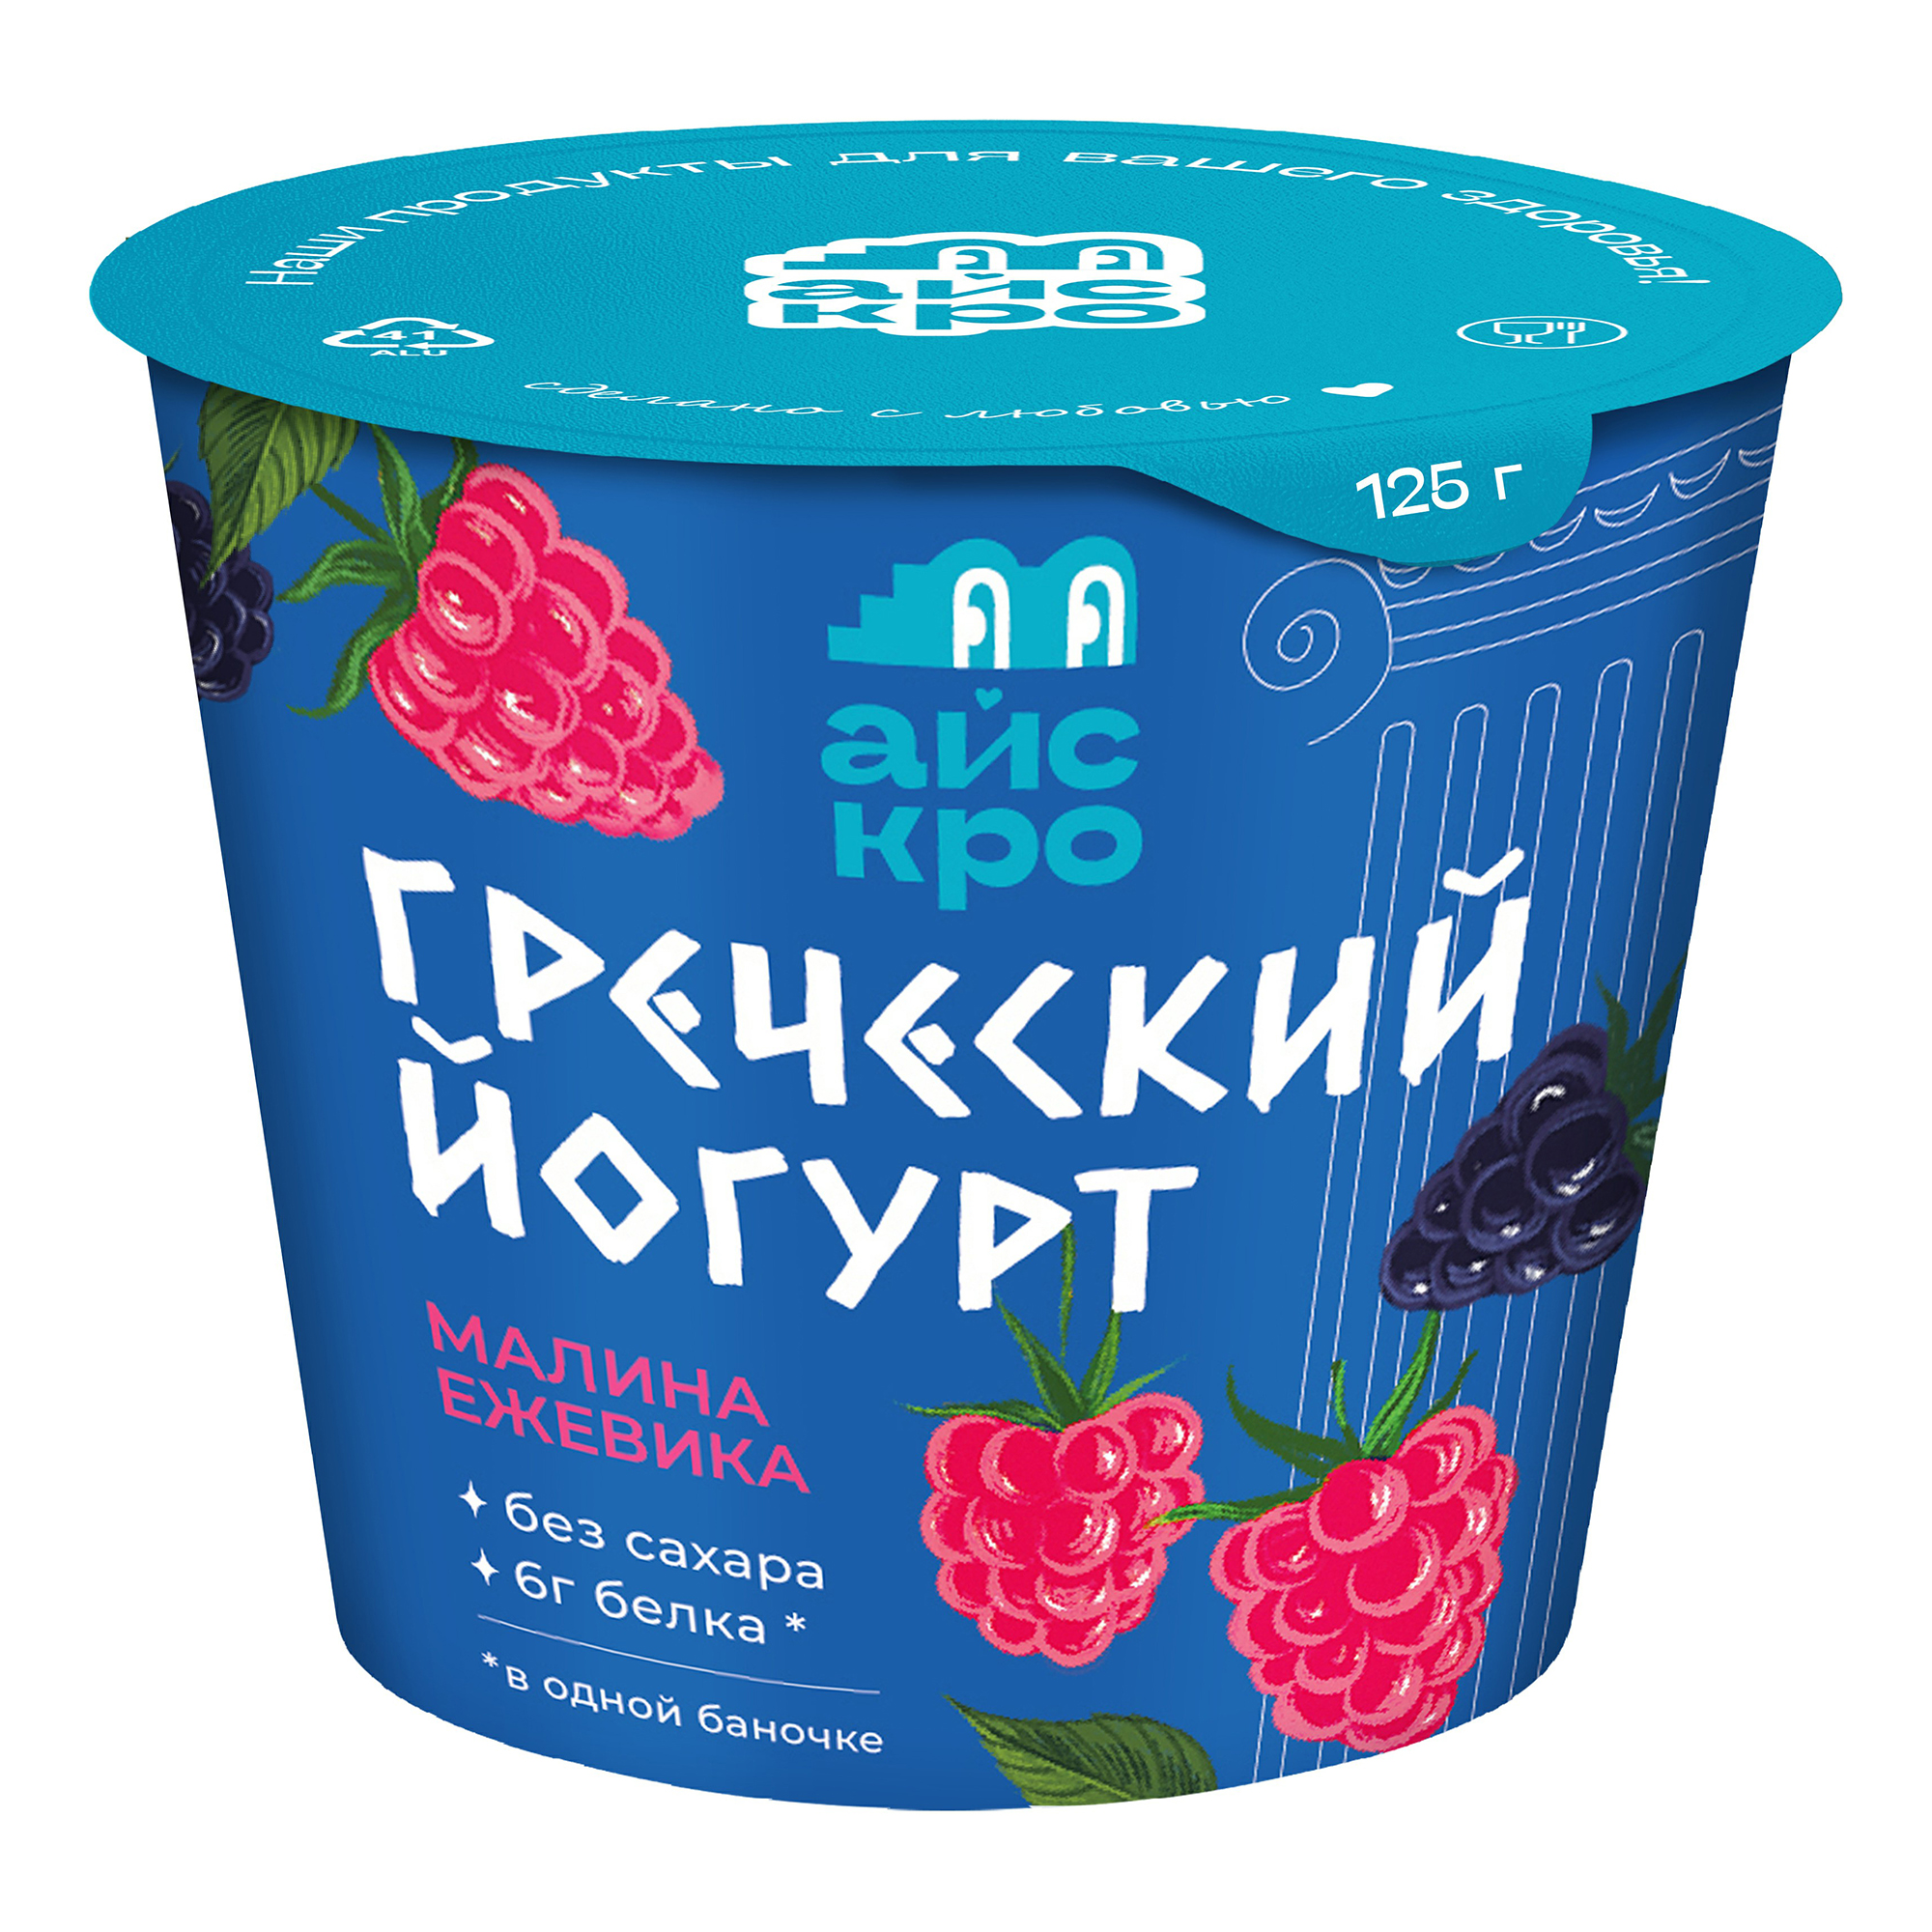 Йогурт Греческий с начинкой Ежевика-малина 6% - 125 г